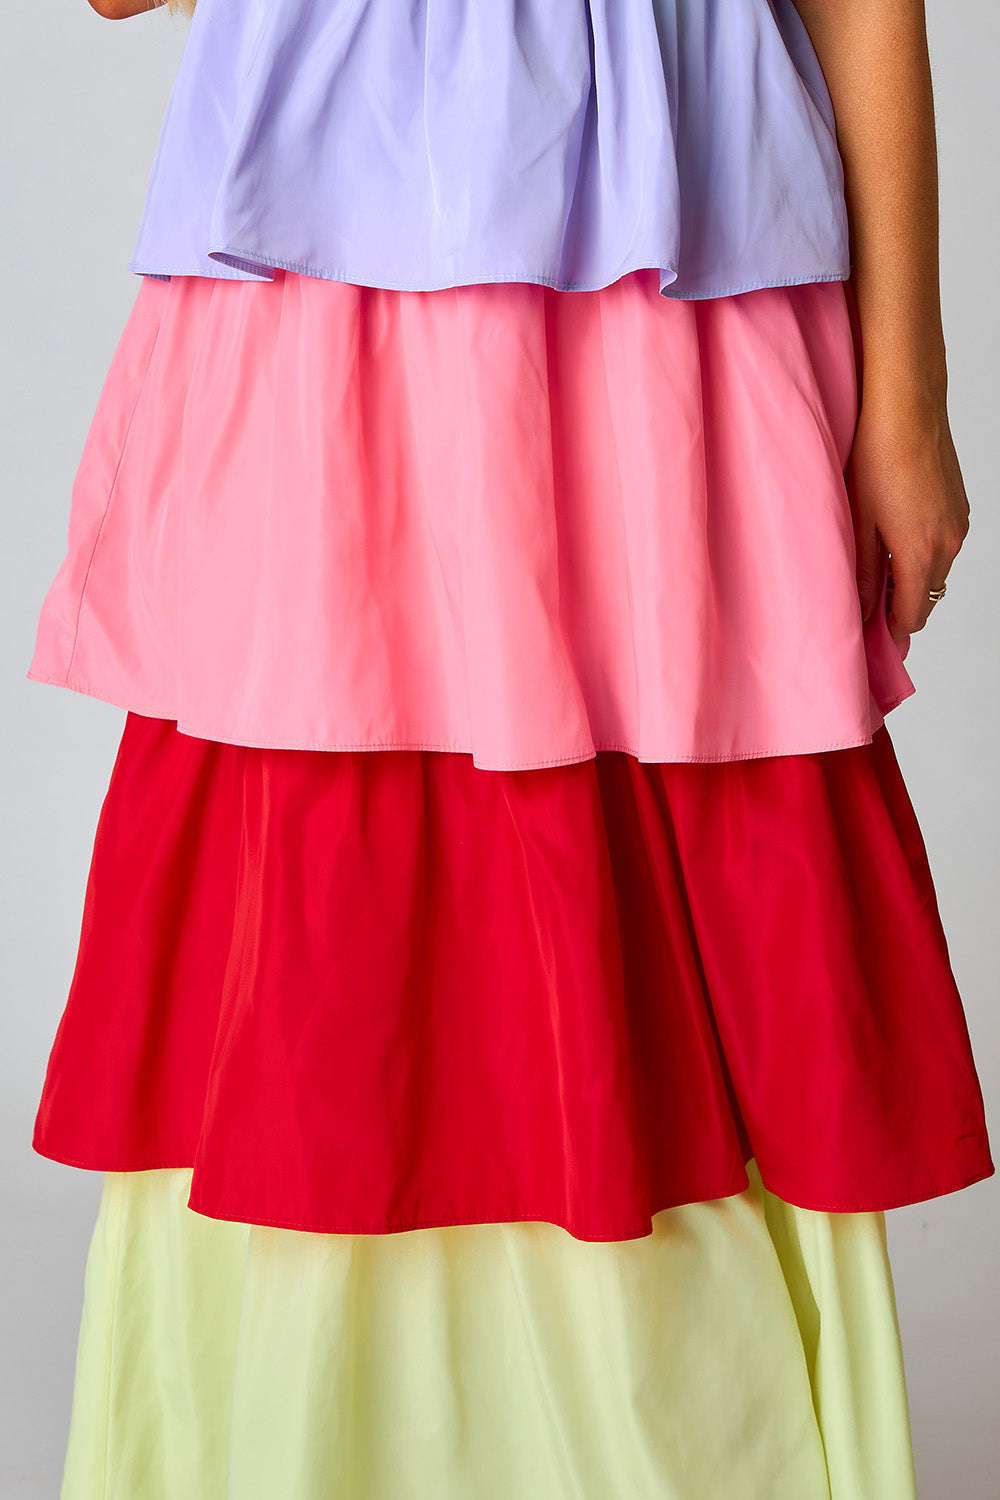 Callie Colorful Maxi Dress